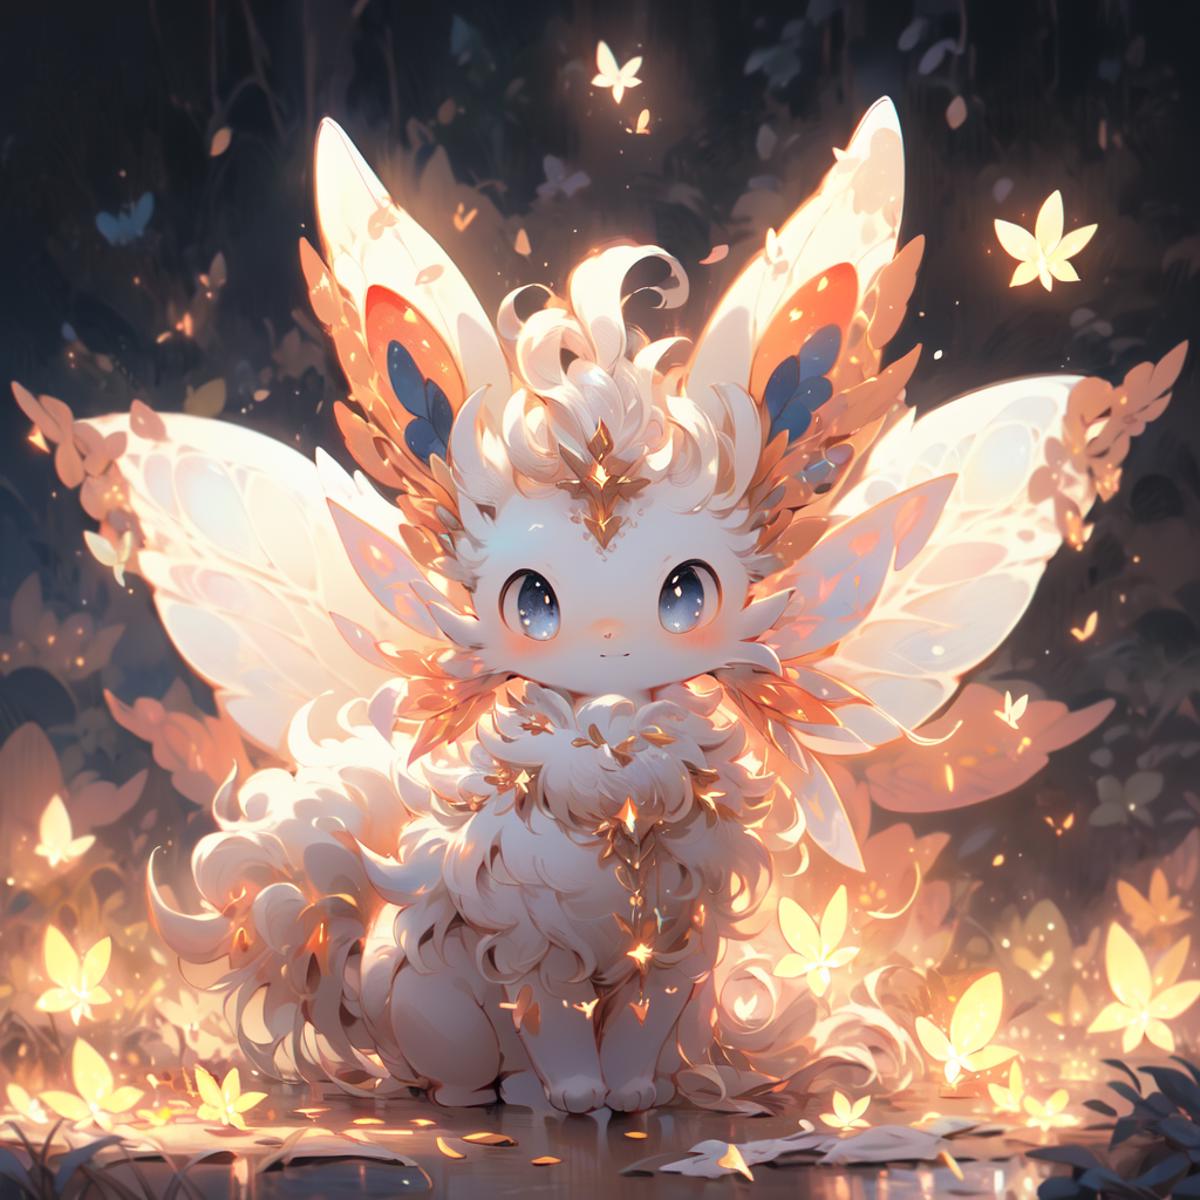 niji - fairy image by Cinsdia